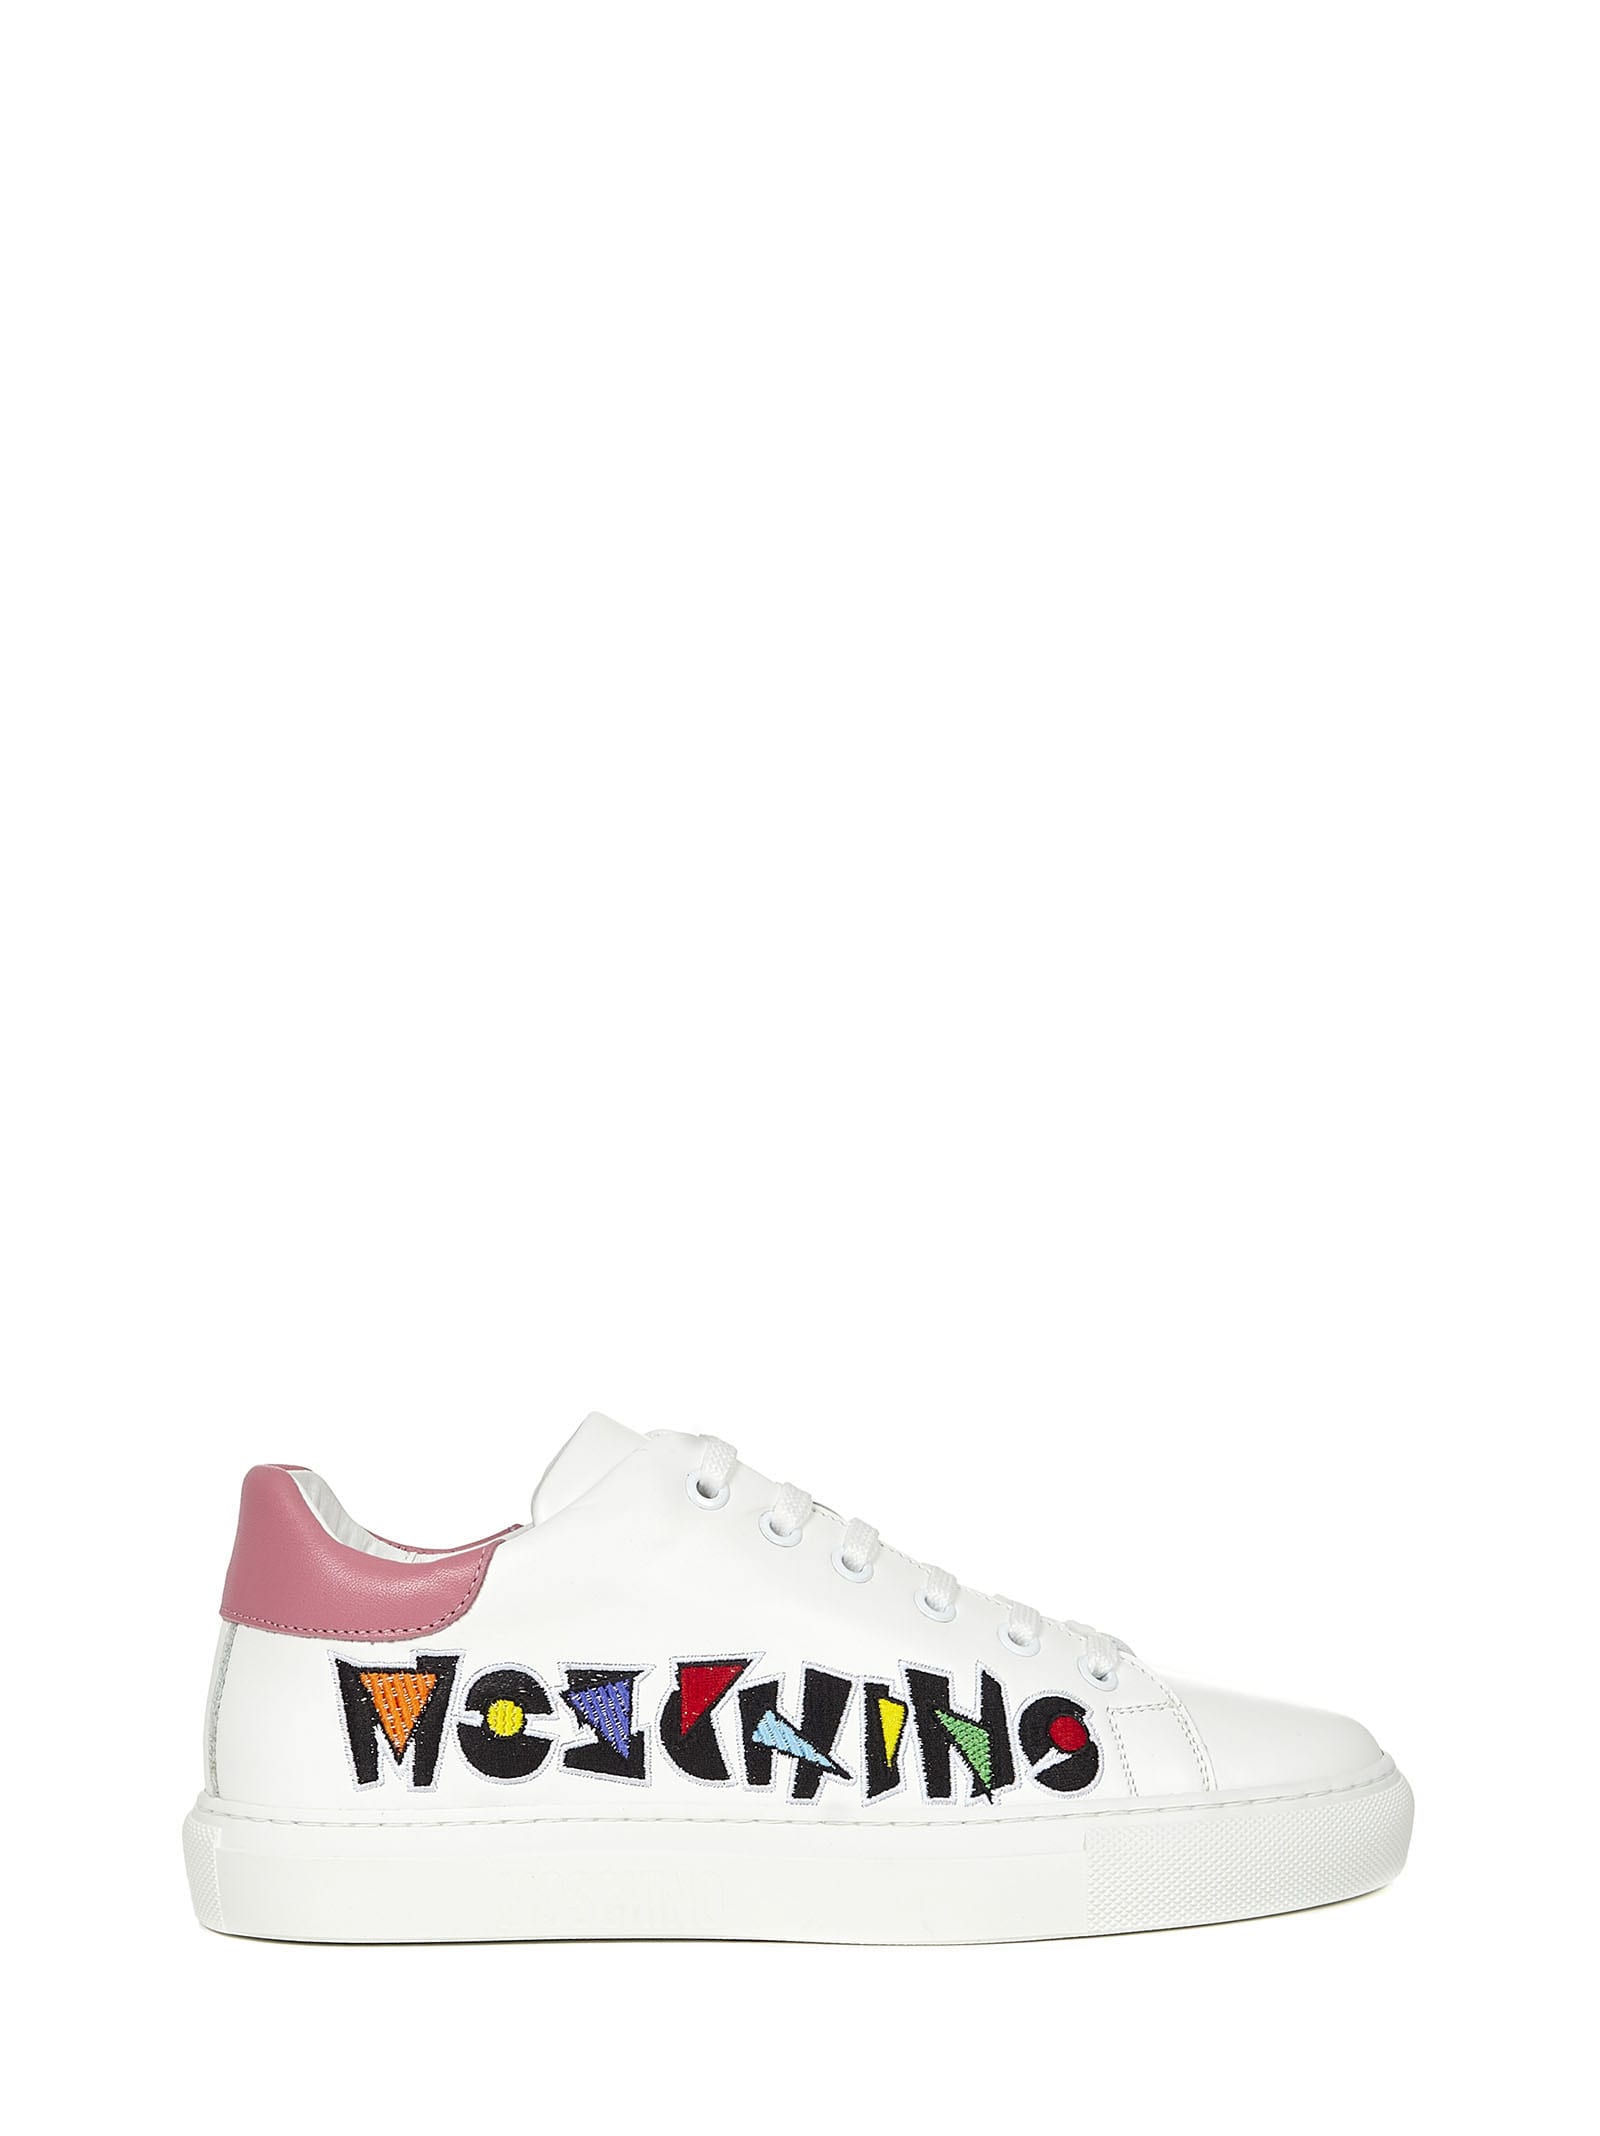 Buy Moschino Serena 25 Sneakers (price in US$) Online | Shoe Trove